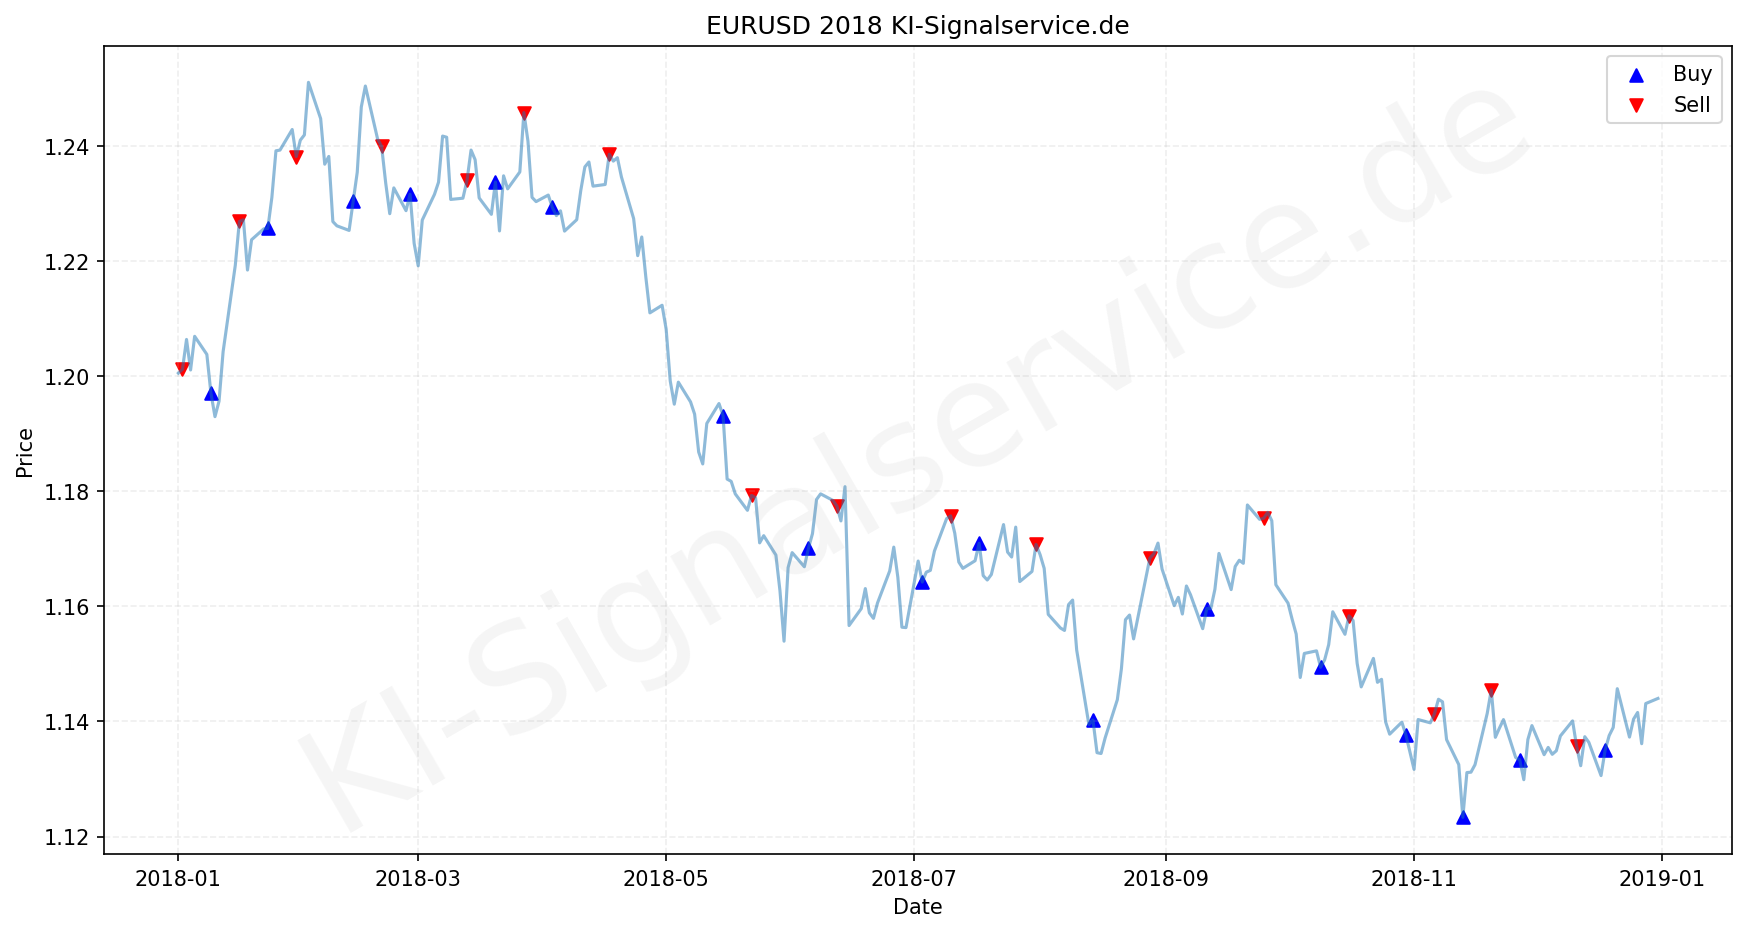 EURUSD Chart - KI Tradingsignale 2018